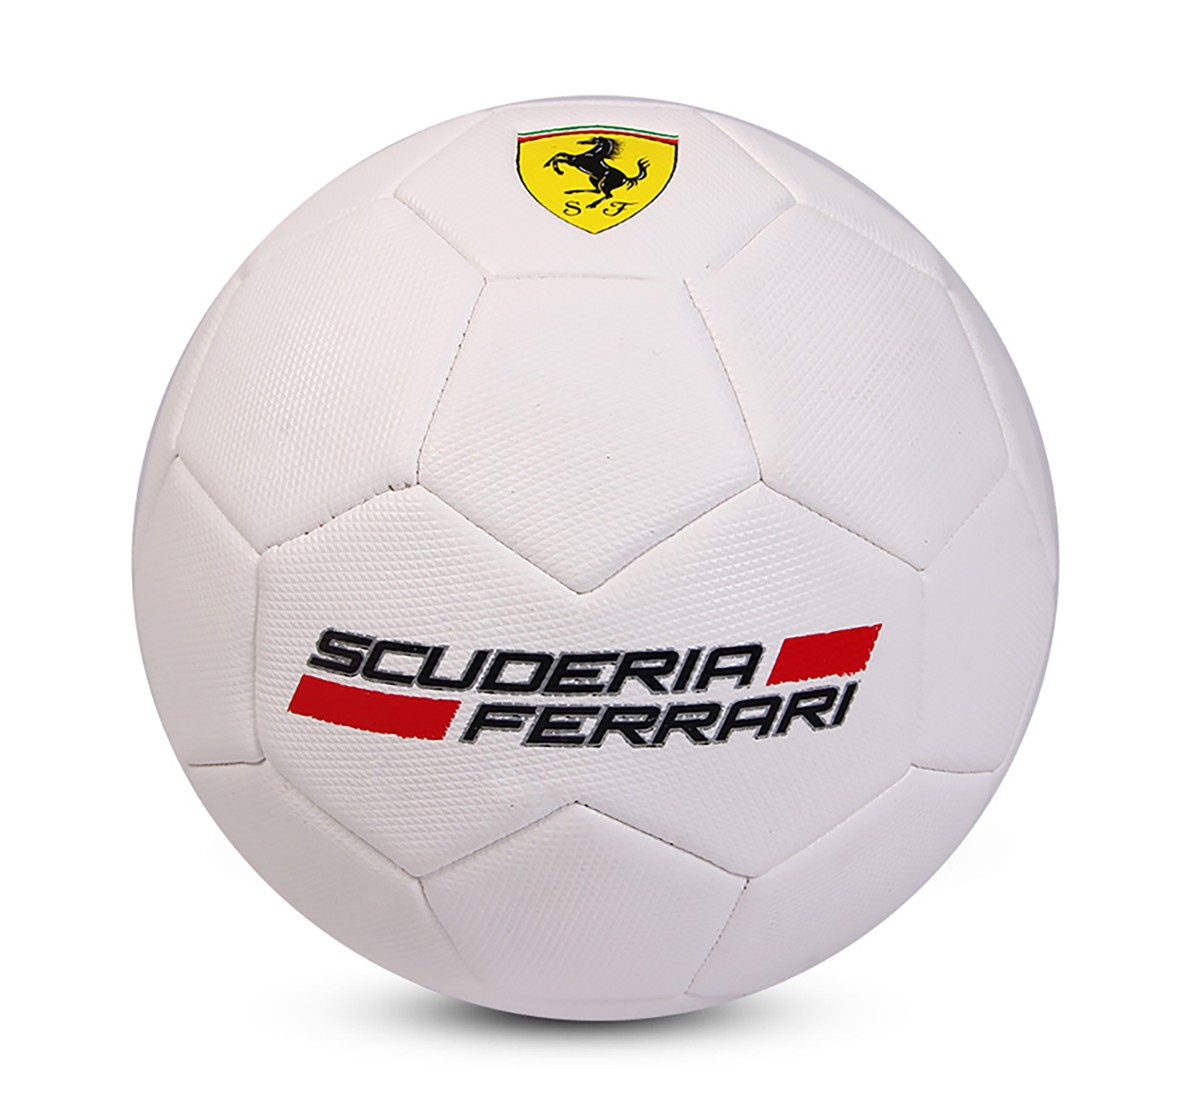 Ferrari Football Size 5 Pvc, Sports & Accessories for Kids age 5Y+ (White)